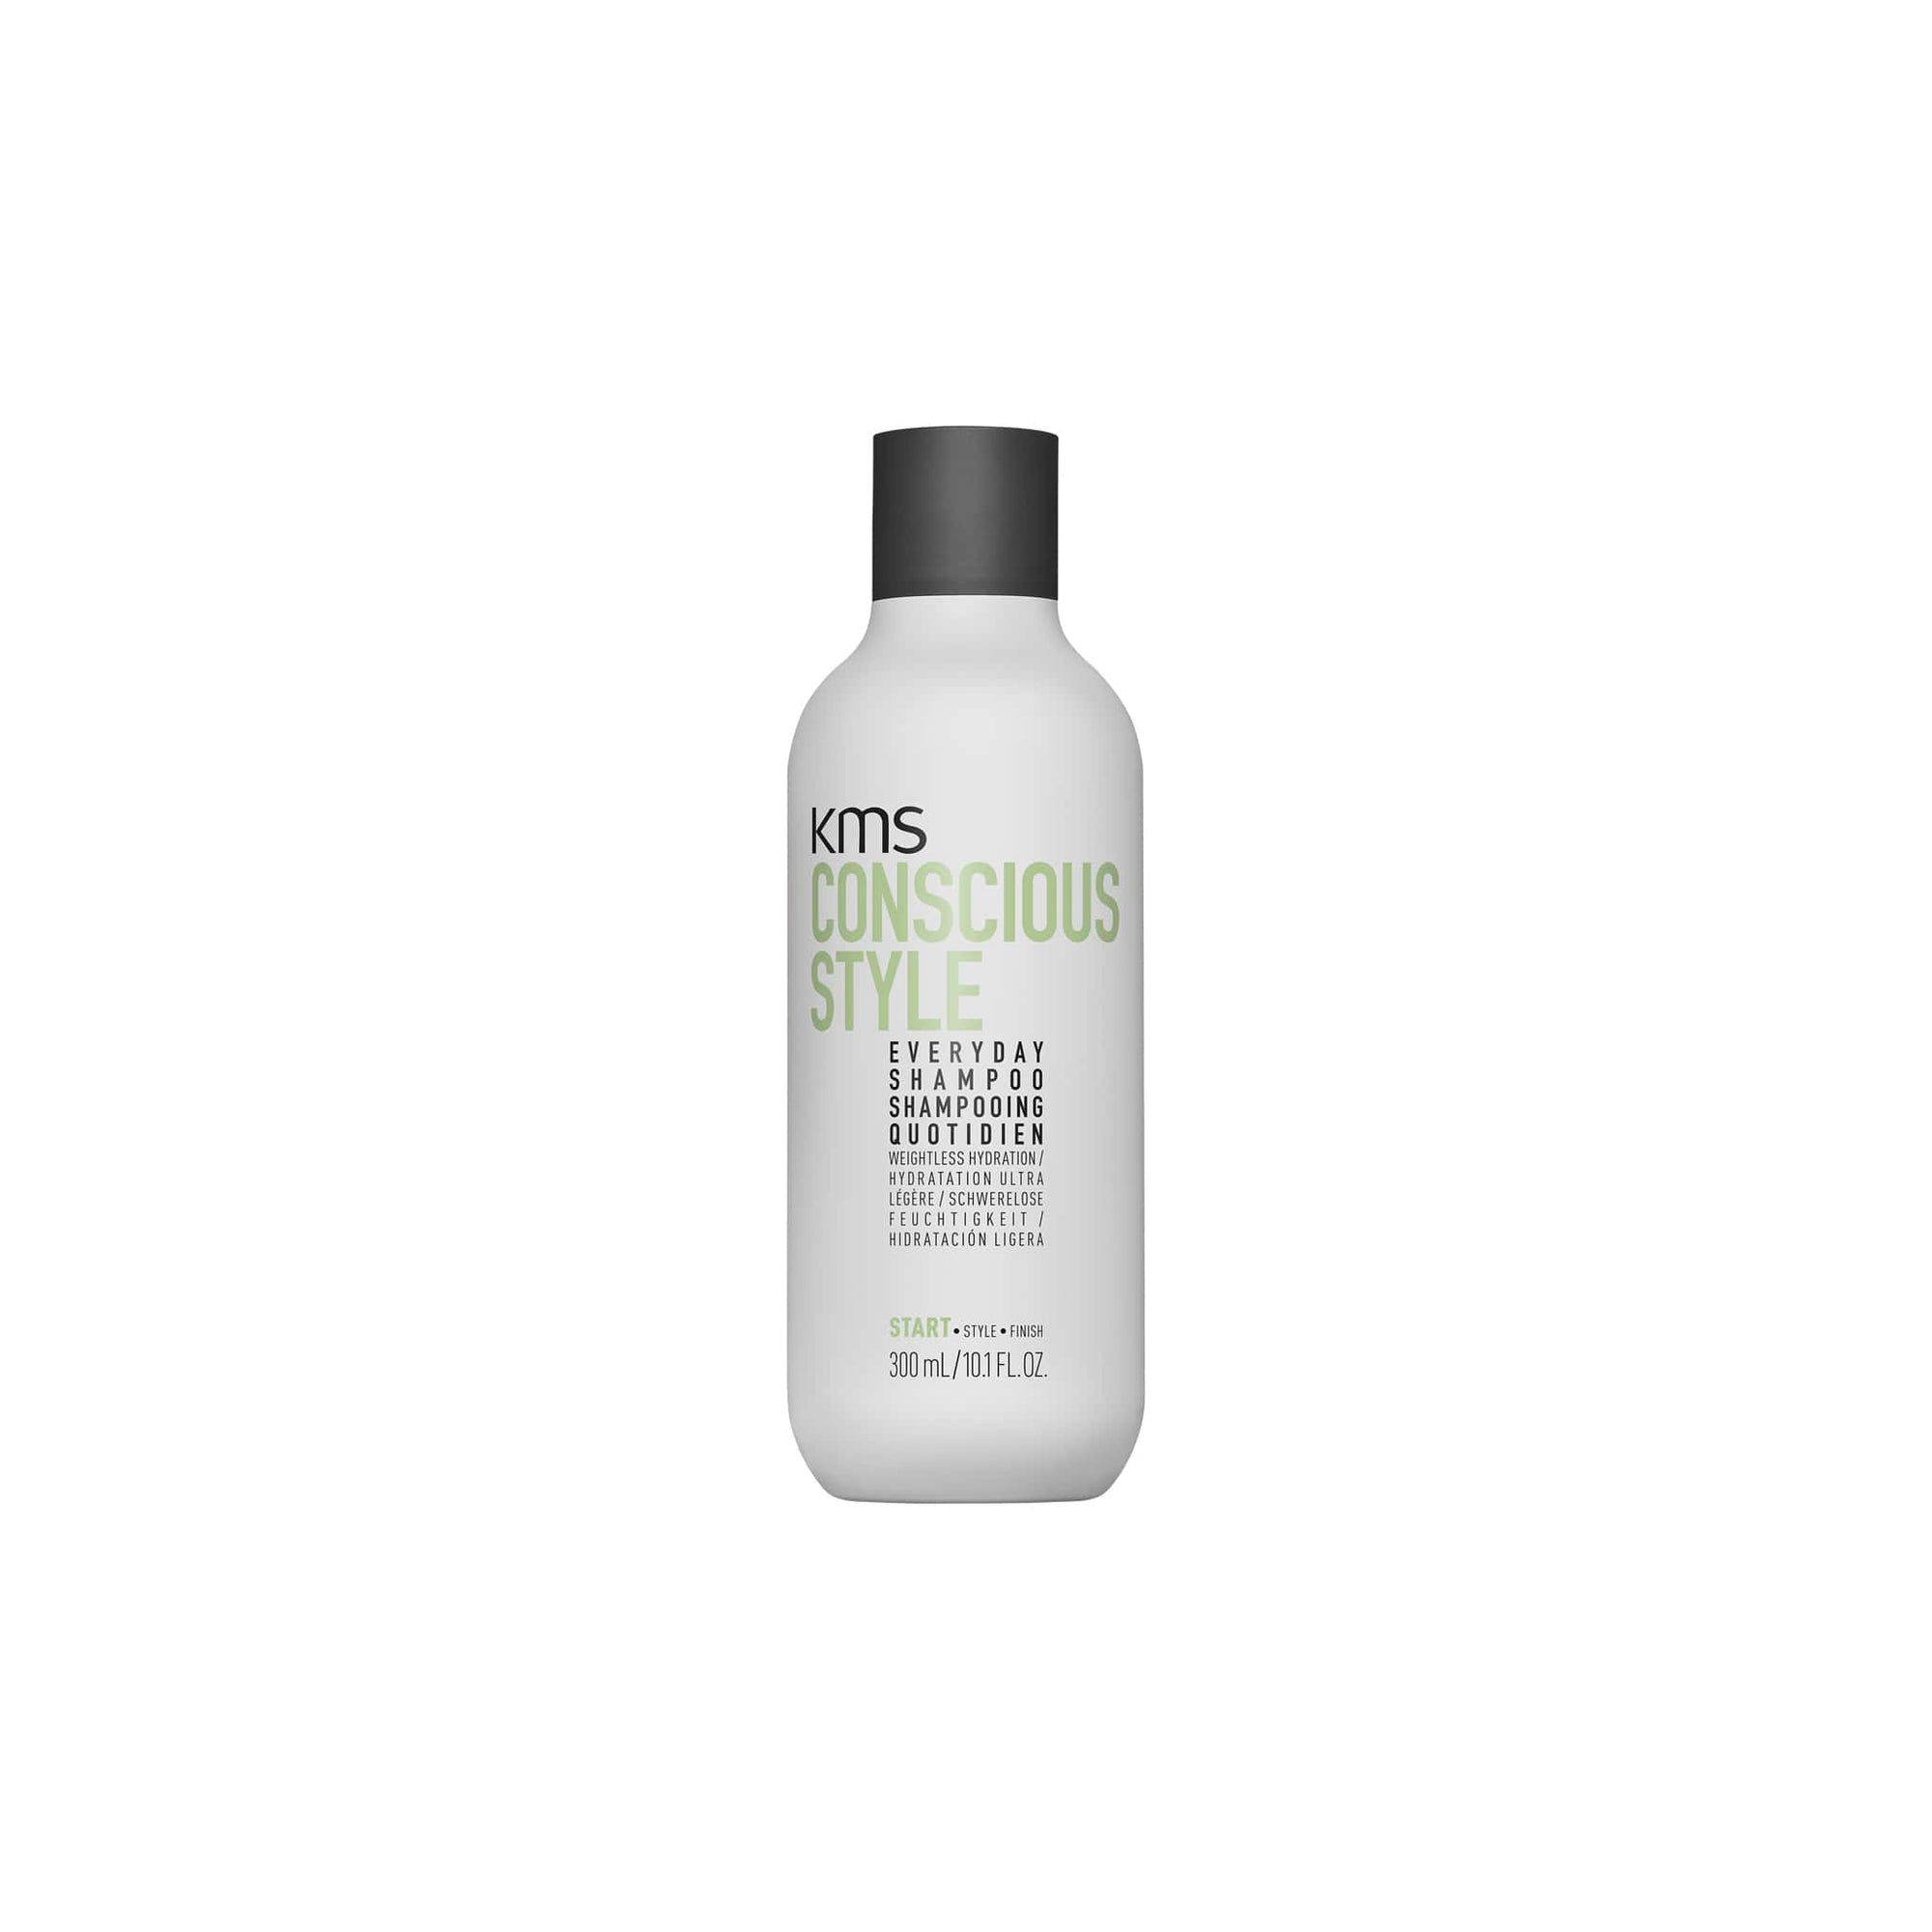 Kms California Conscious Style Shampoo | Retail Box